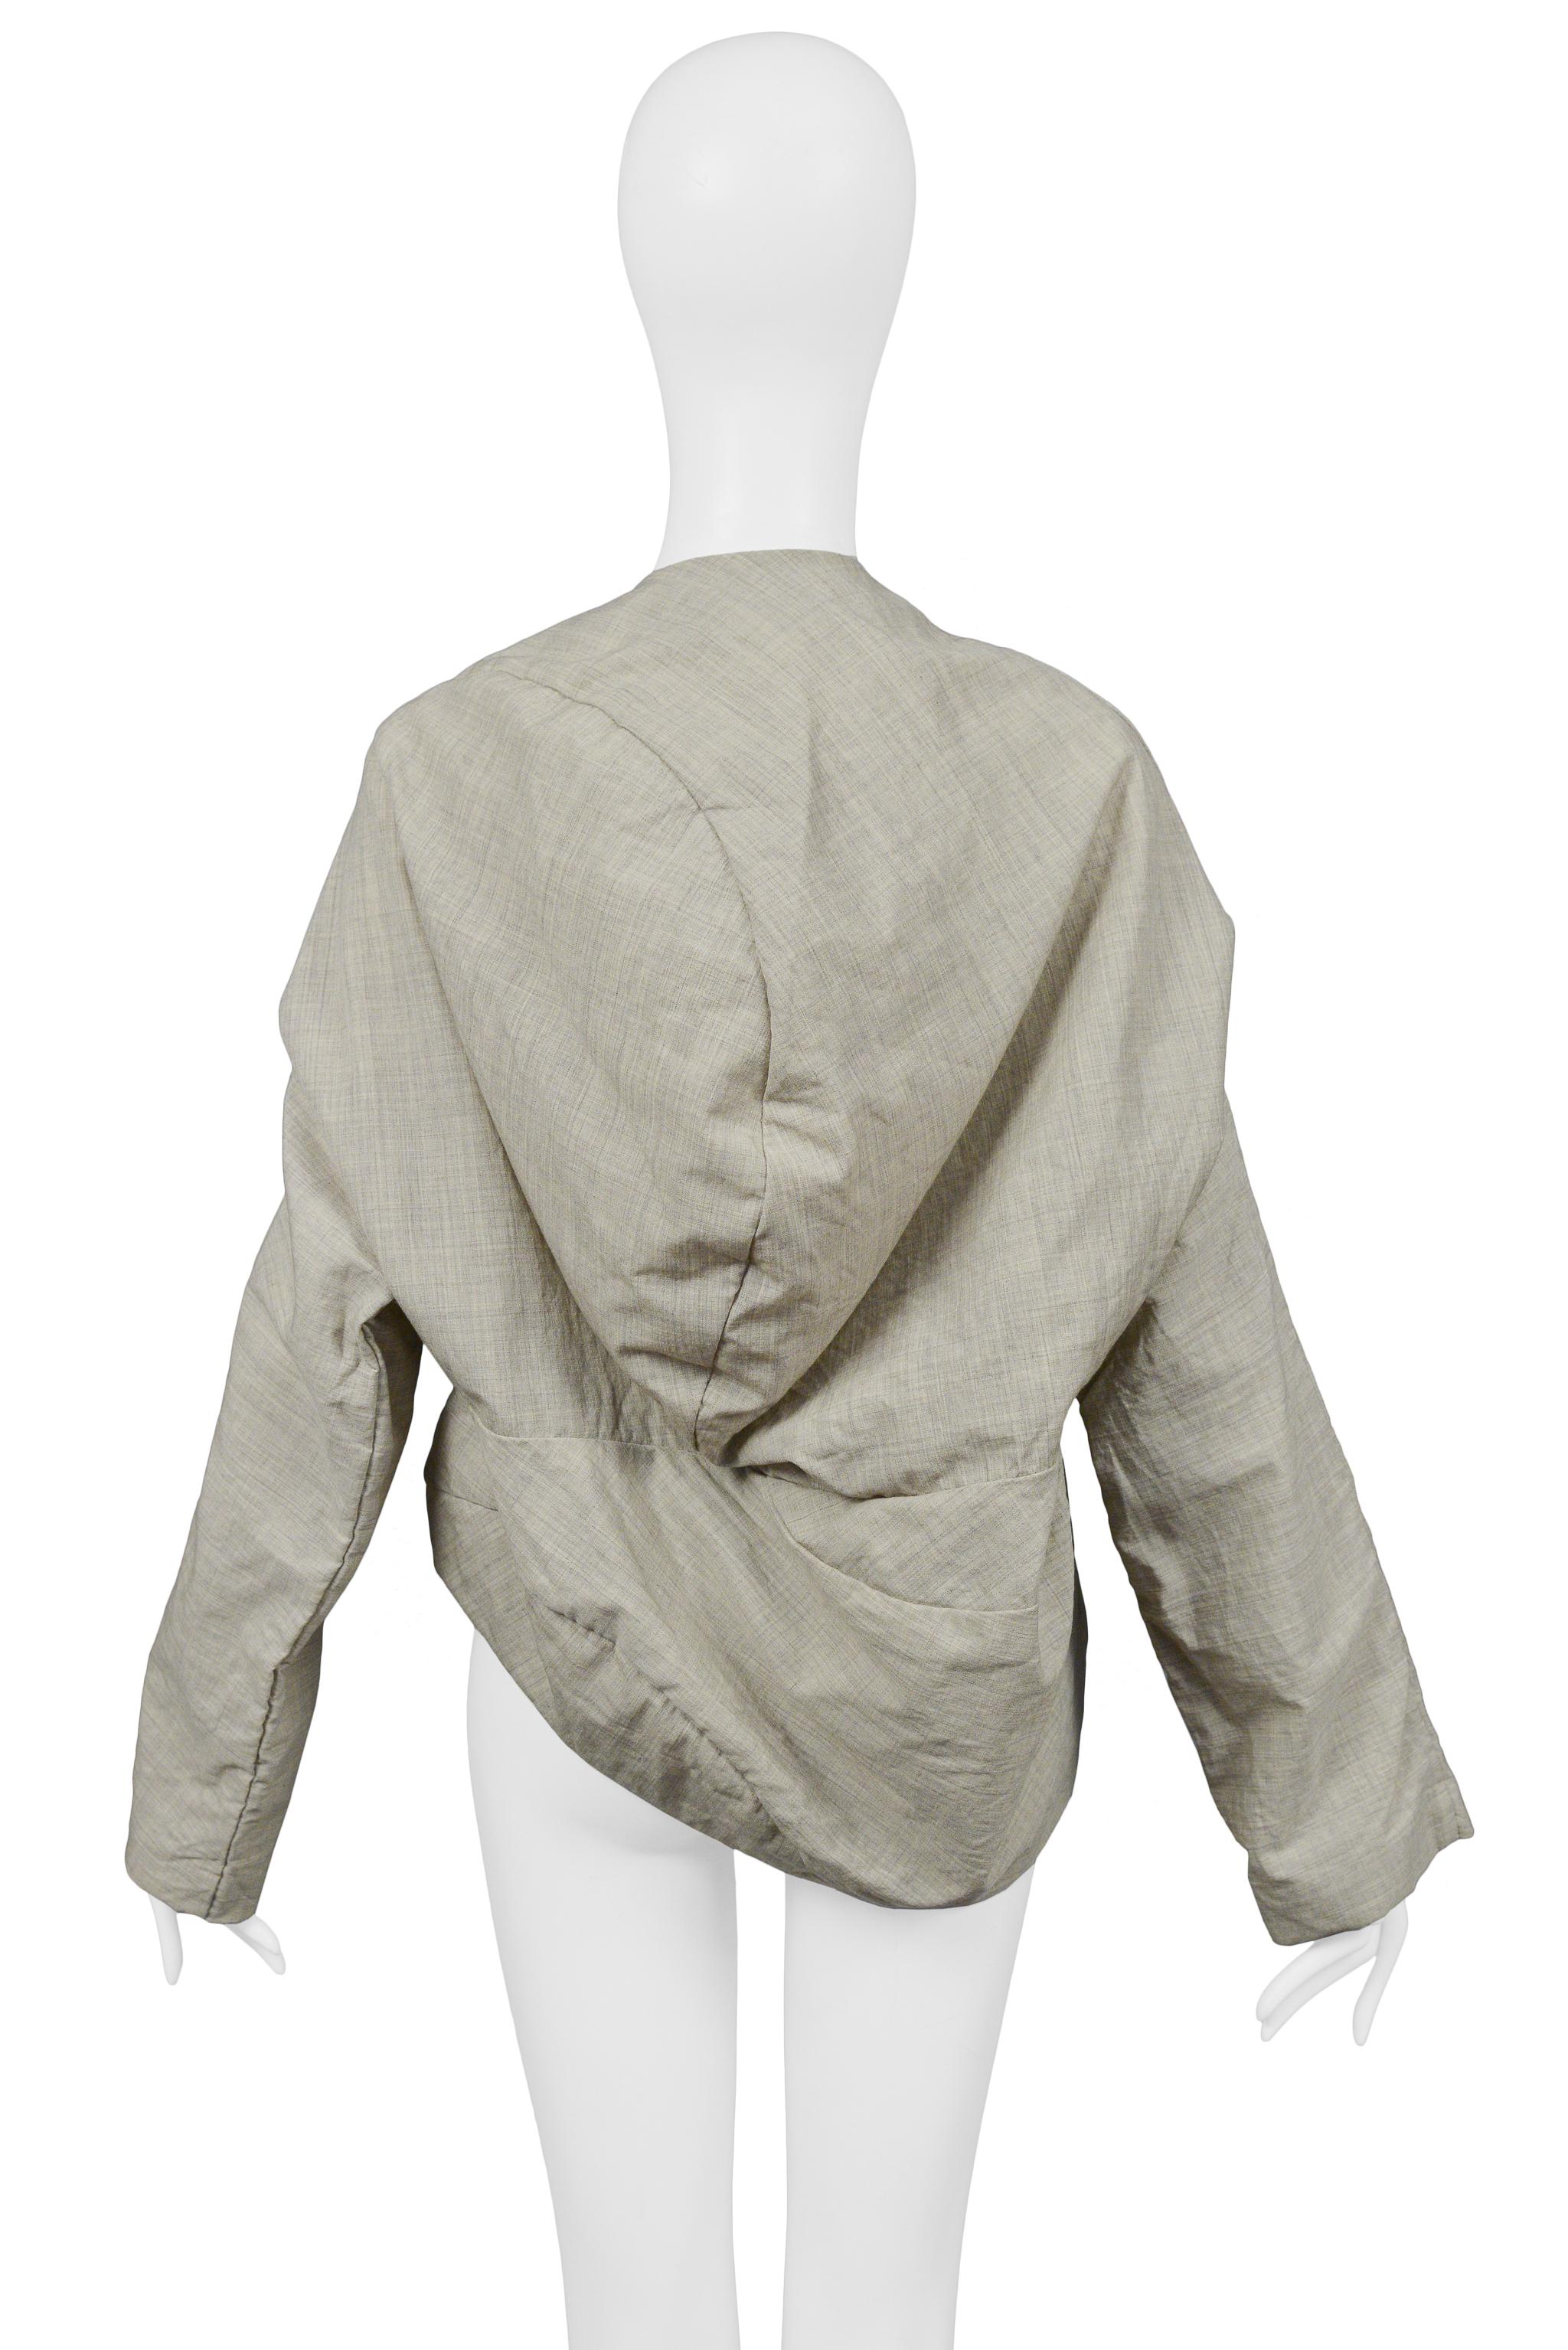 Comme Des Garcons Grey Linen Lumps & Bumps Jacket 1997 In Excellent Condition For Sale In Los Angeles, CA